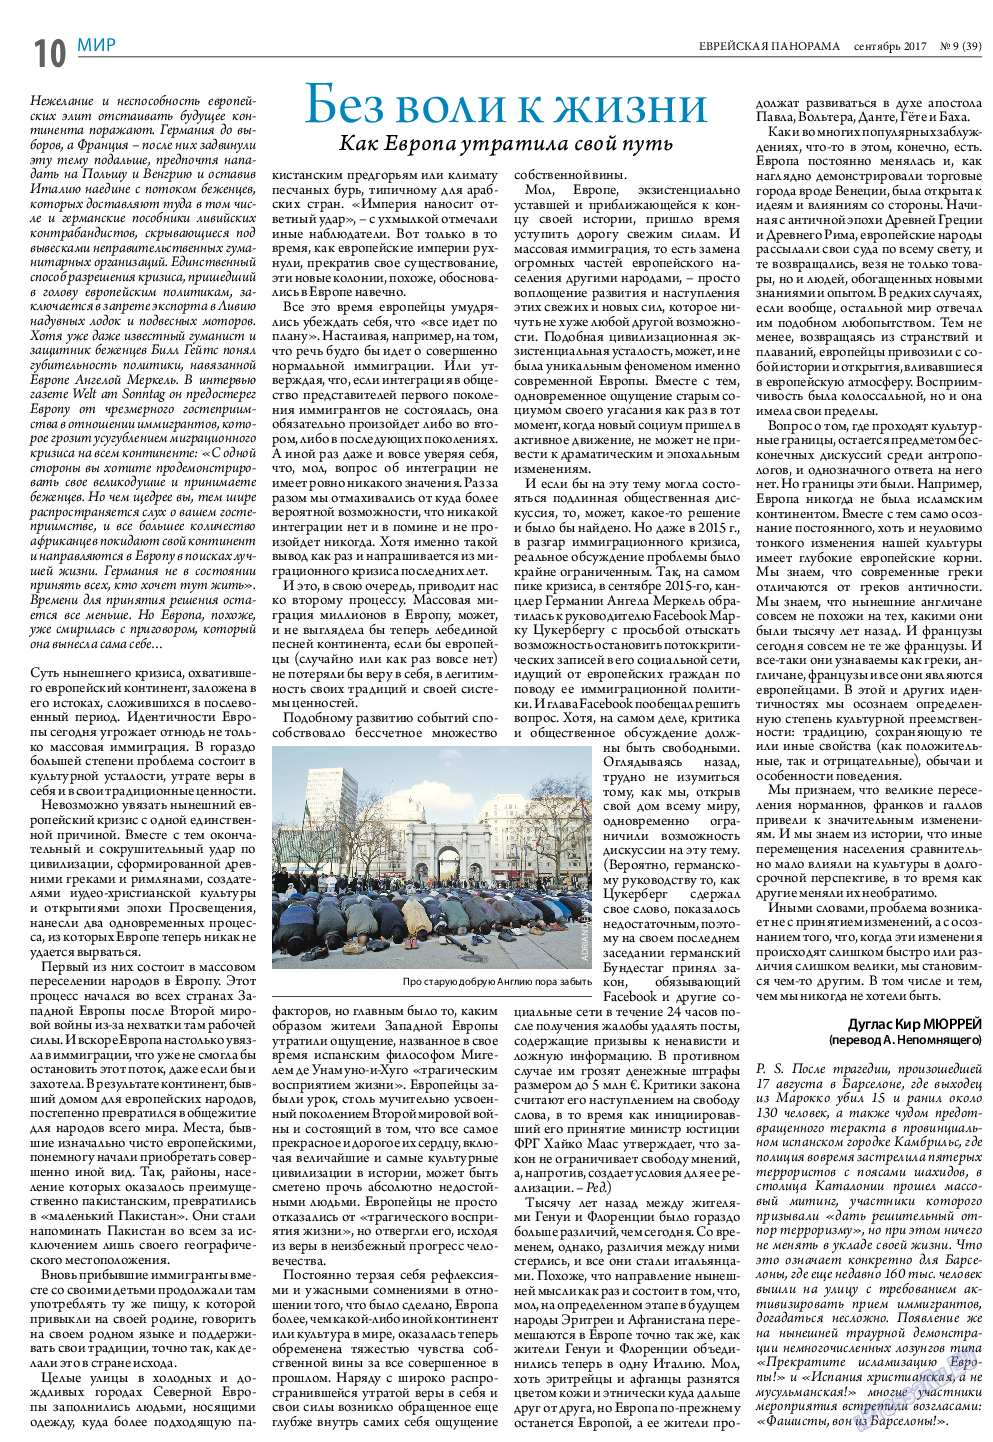 Еврейская панорама, газета. 2017 №9 стр.10